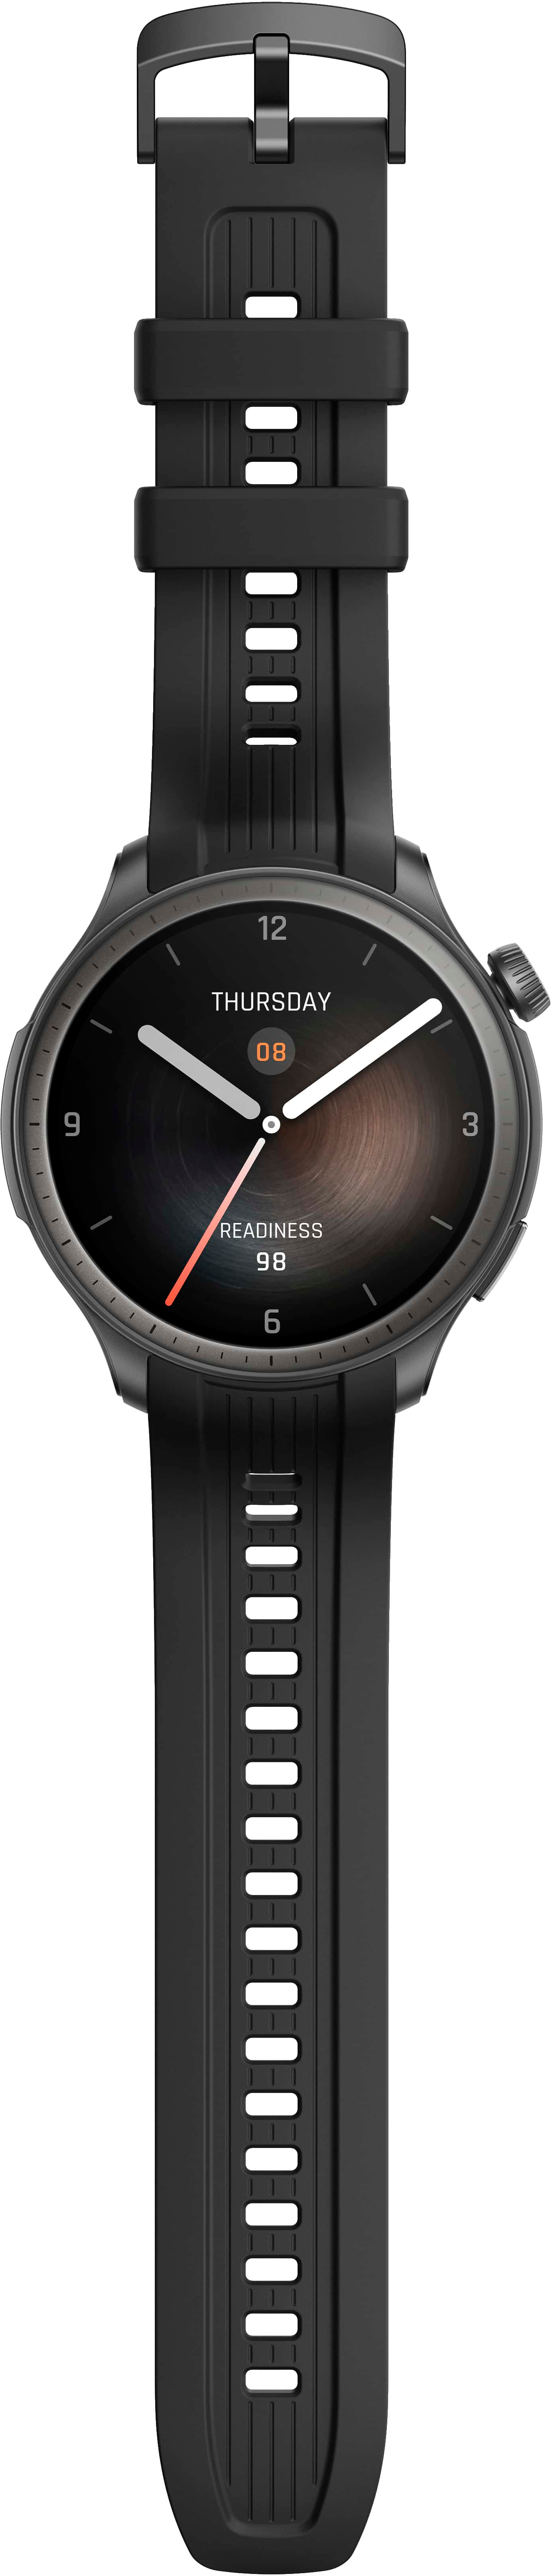 Amazfit Balance Smartwatch, 1.5 HD AMOLED